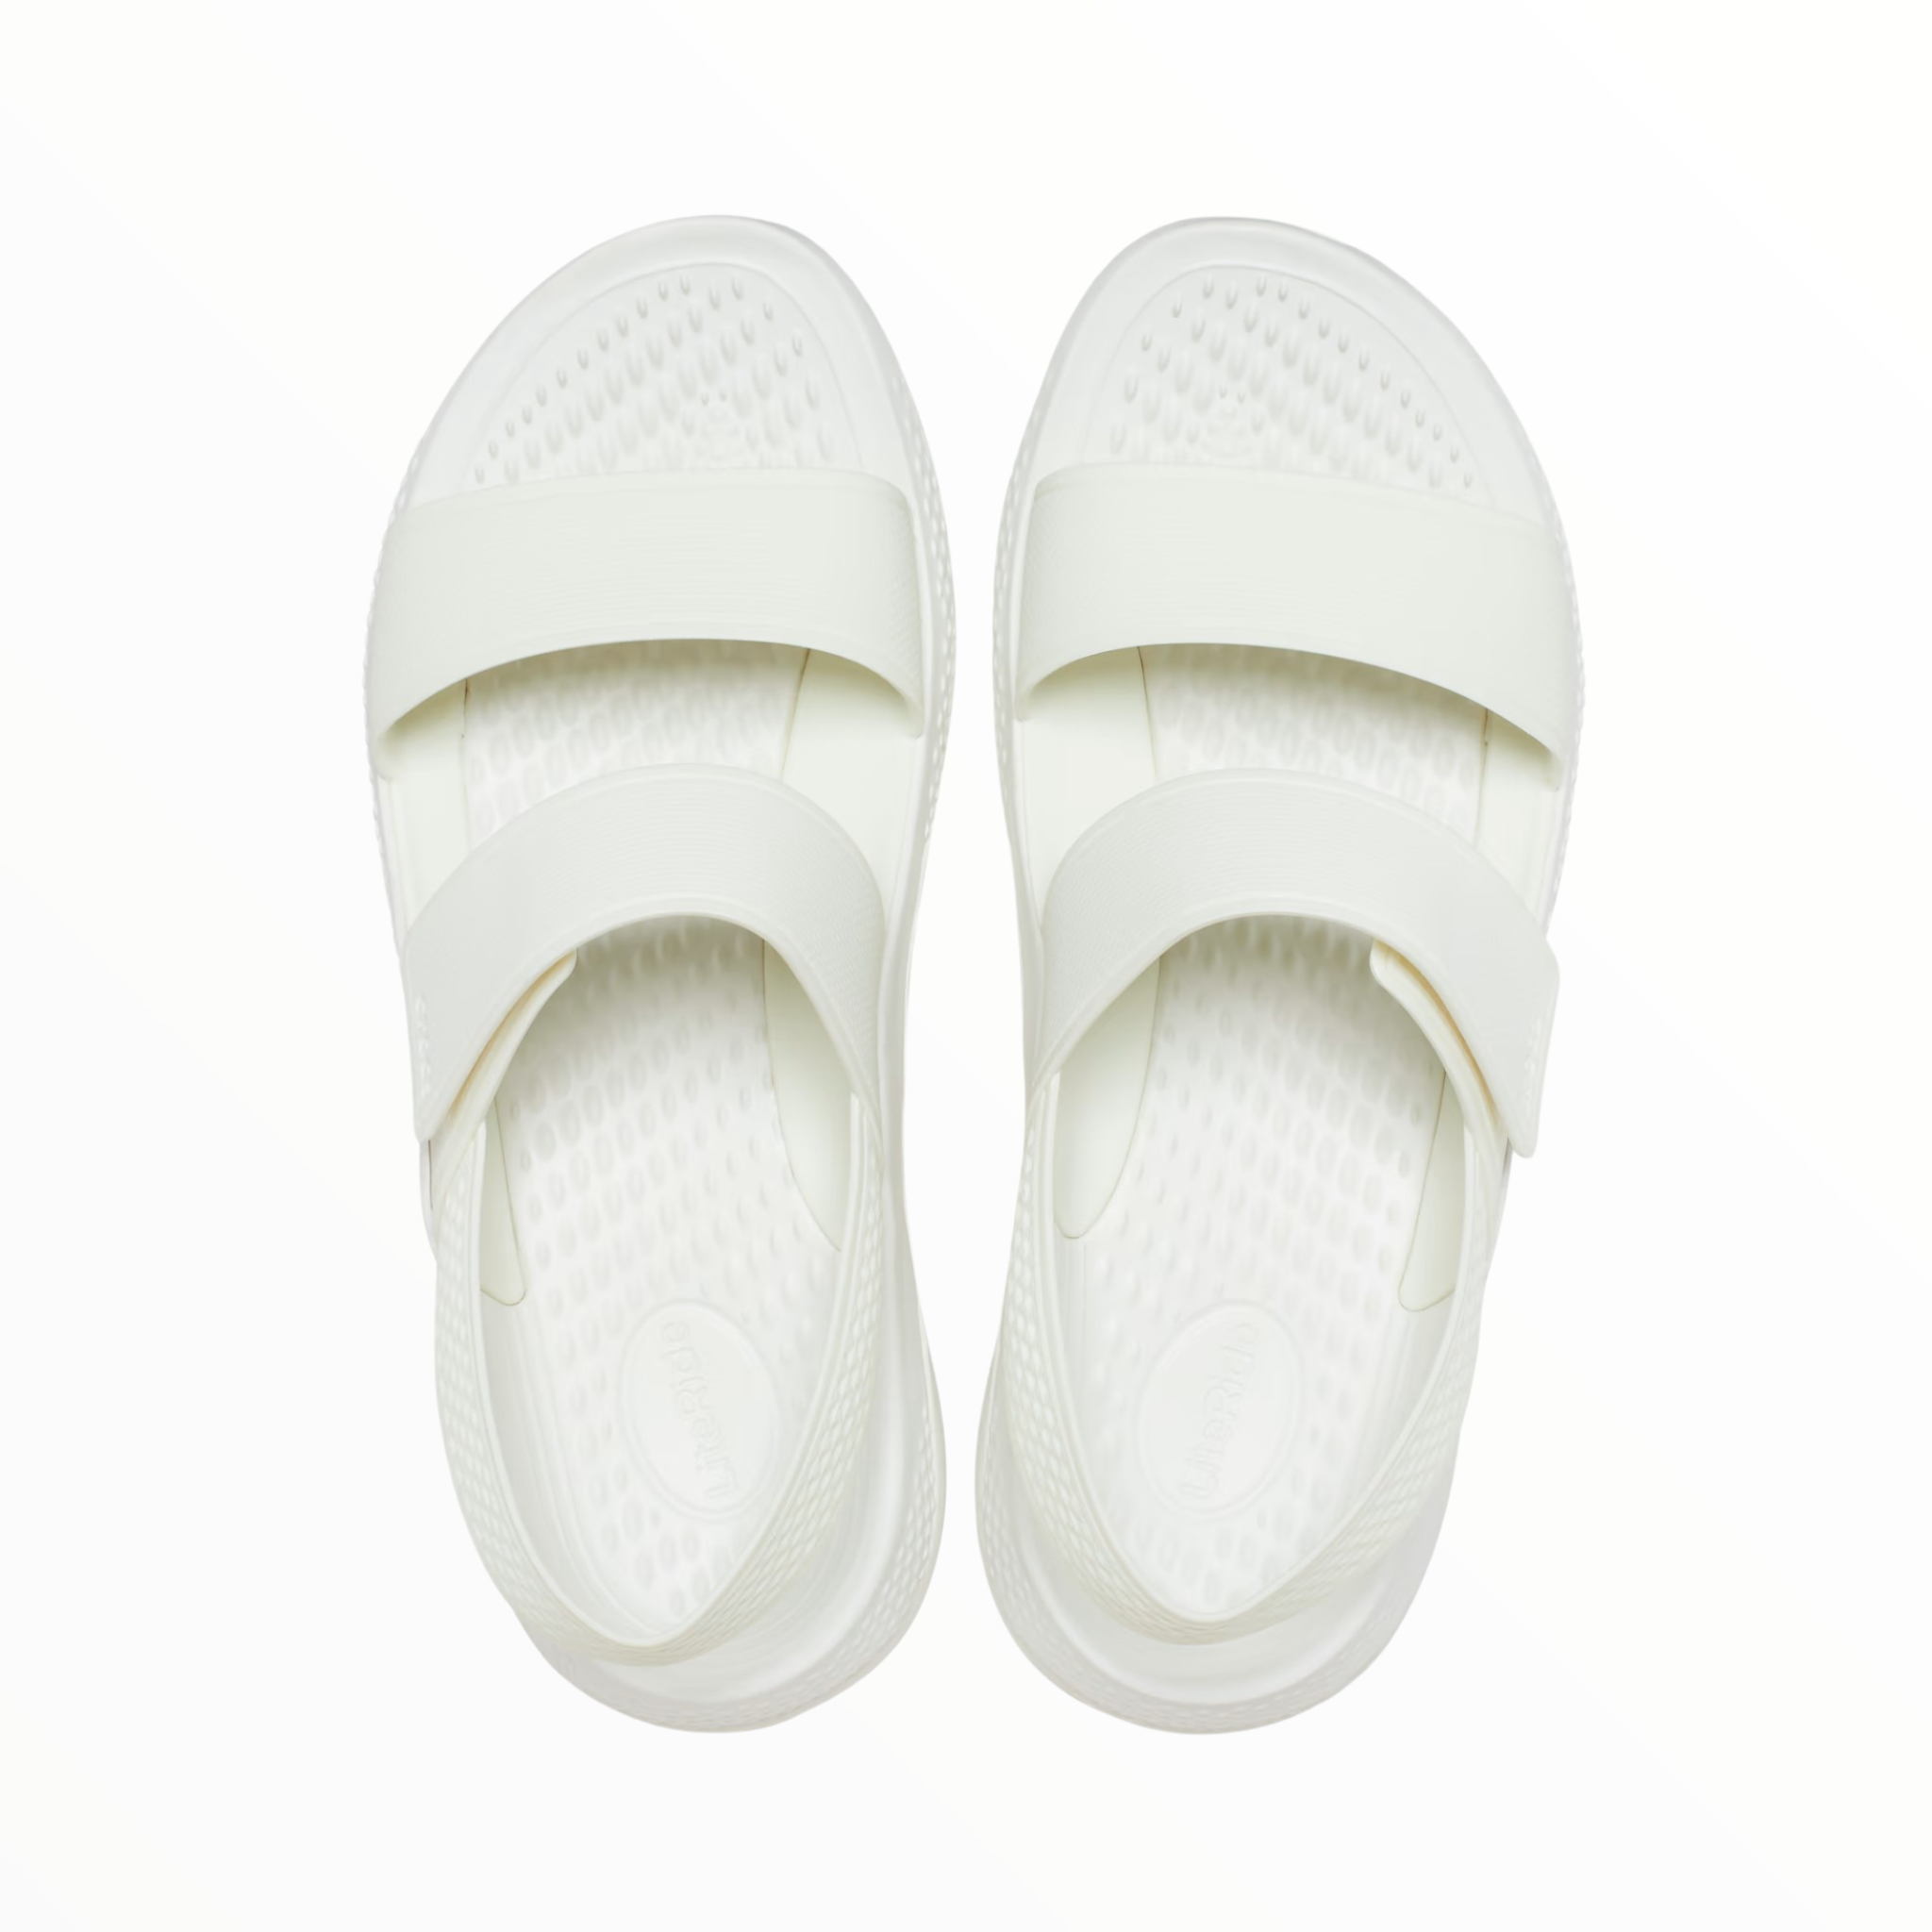 Shop Crocs White LiteRide 360 Marbled Sandals for Women & Men from  MyRunway.co.za